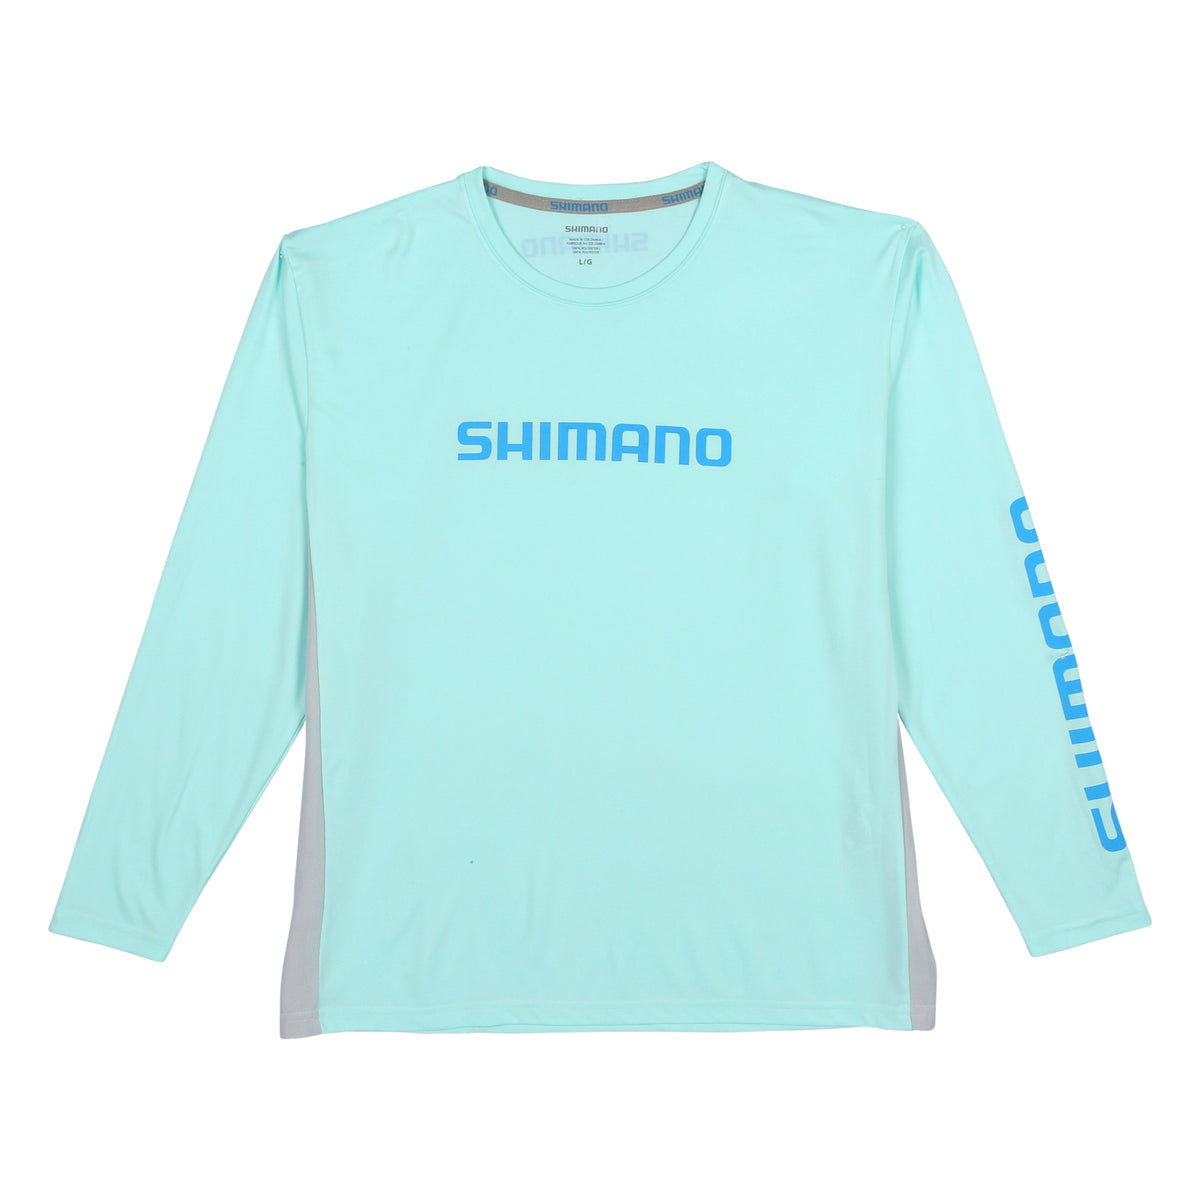 Shimano Vented Long Sleeve Shirt - Ice Check *Clearance* - Tackle